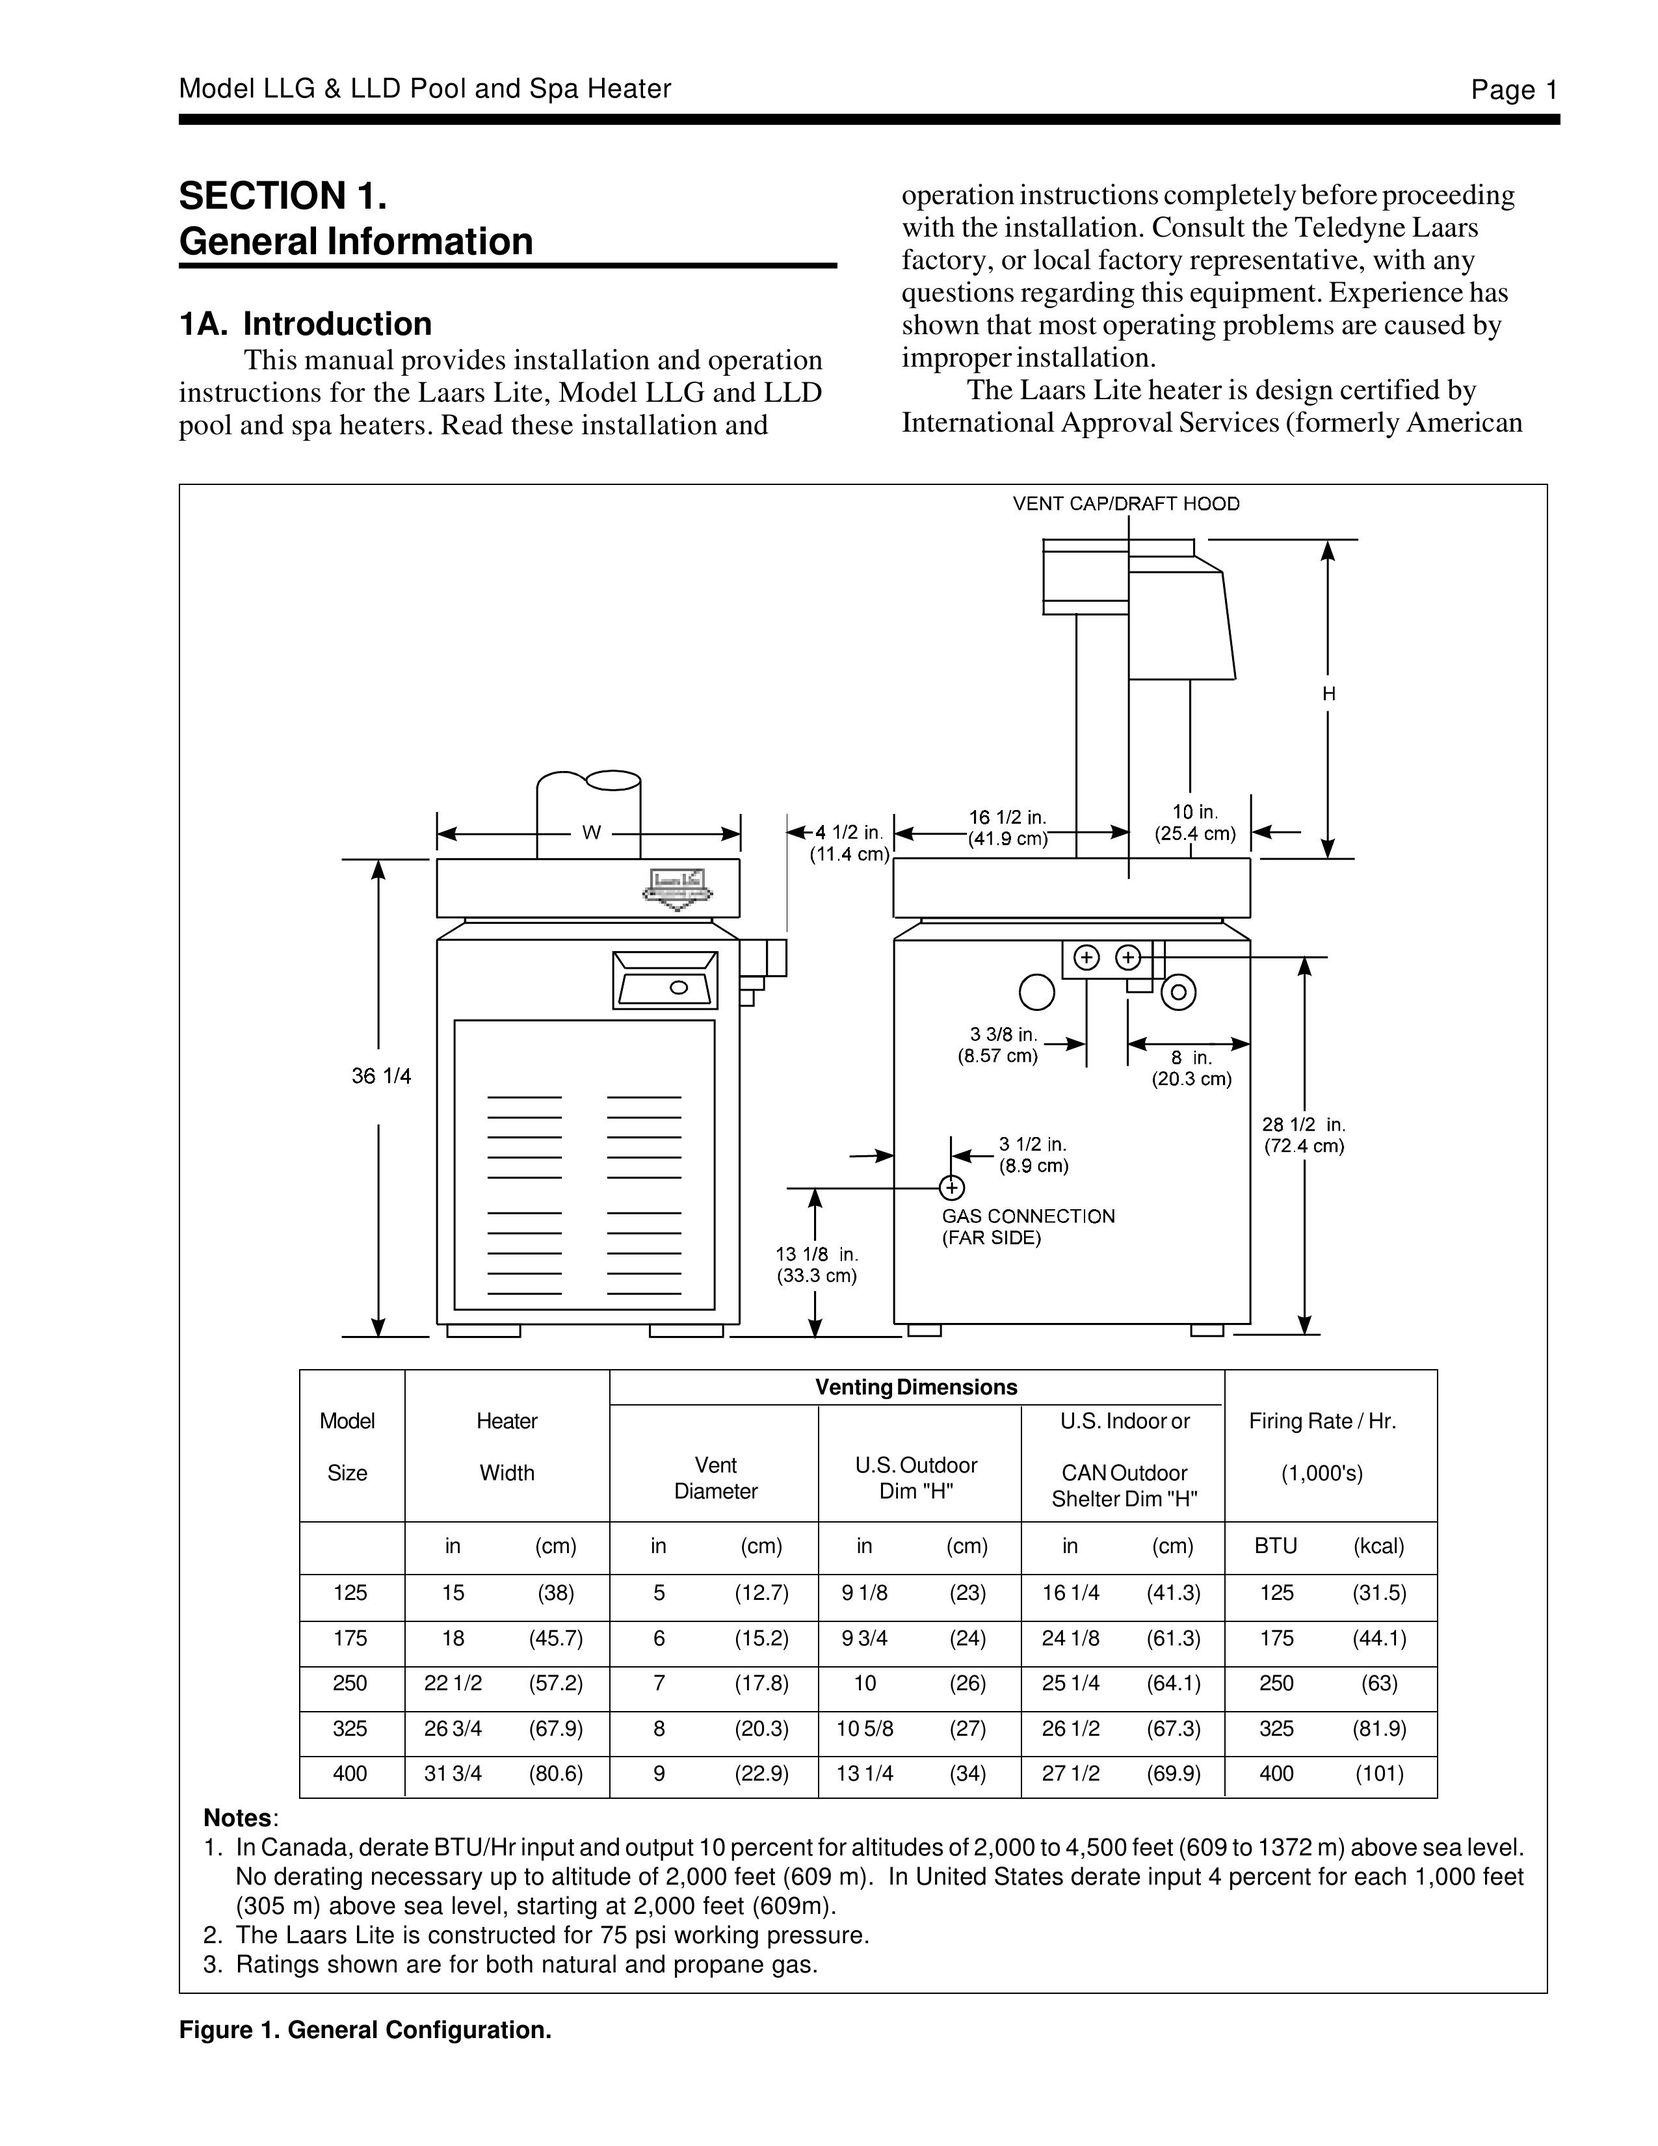 Teledyne LLD Electric Heater User Manual